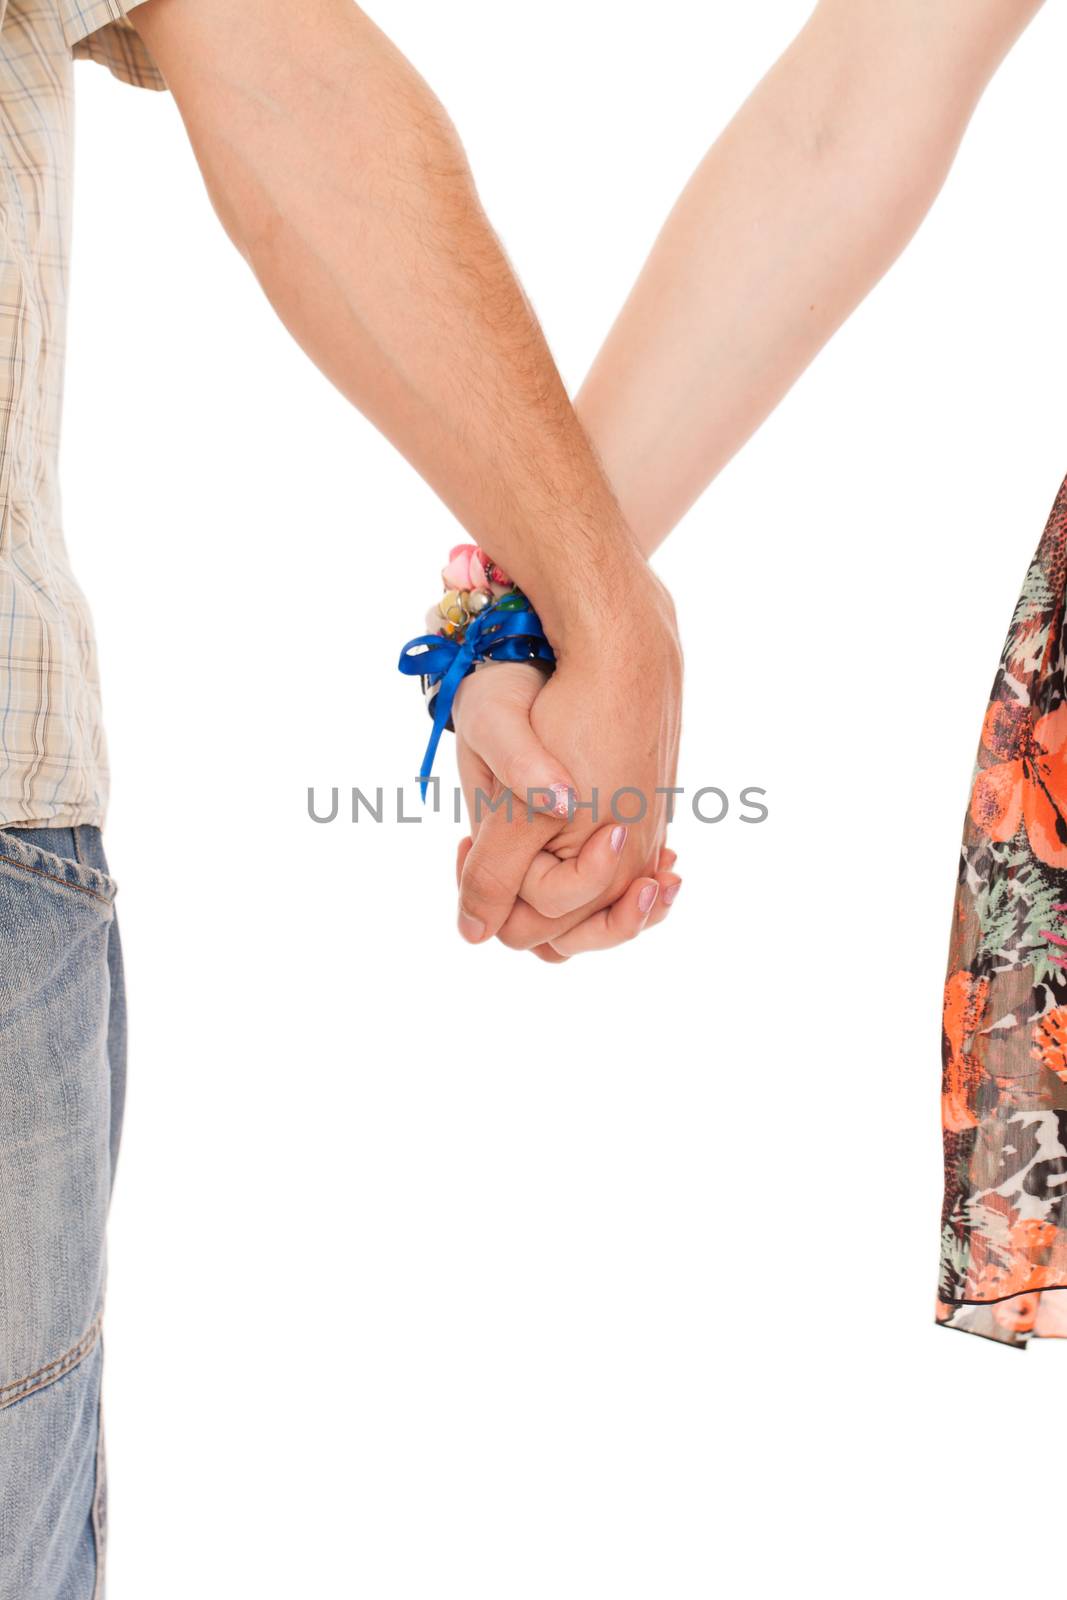 Hands of romantic caucasian couple by rufatjumali